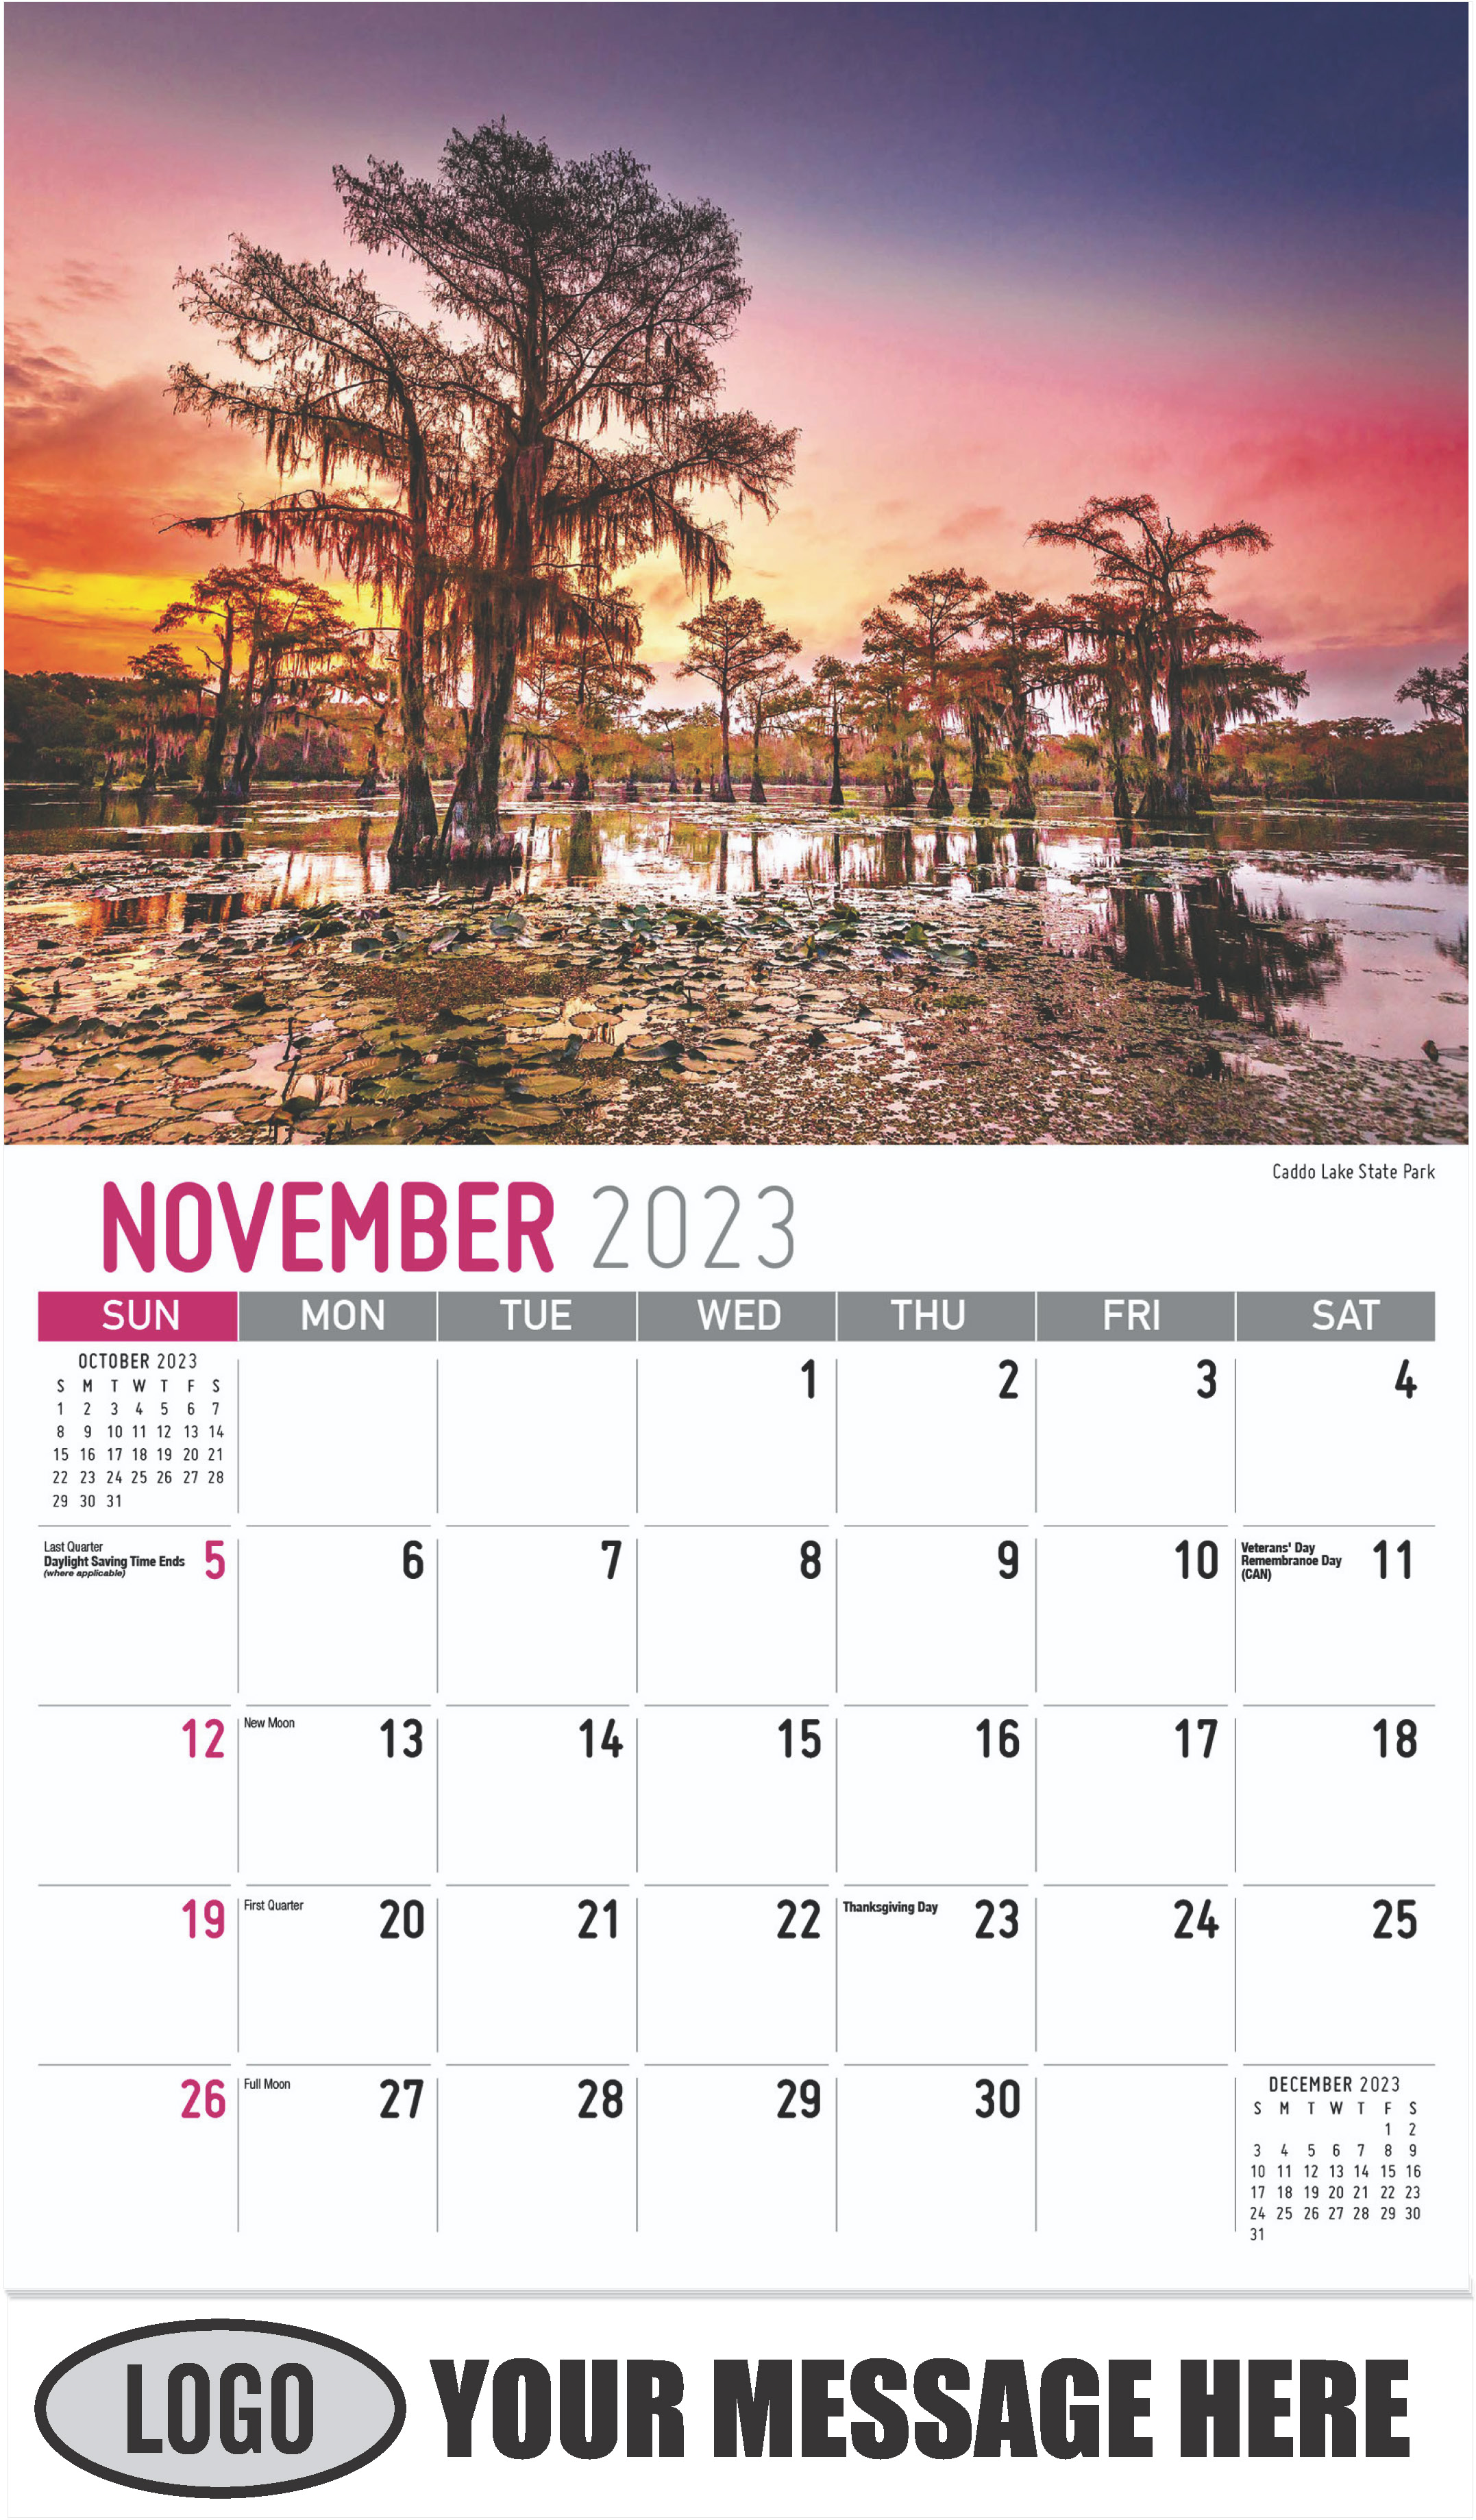 Caddo Lake State Park - November - Scenes of Texas 2023 Promotional Calendar